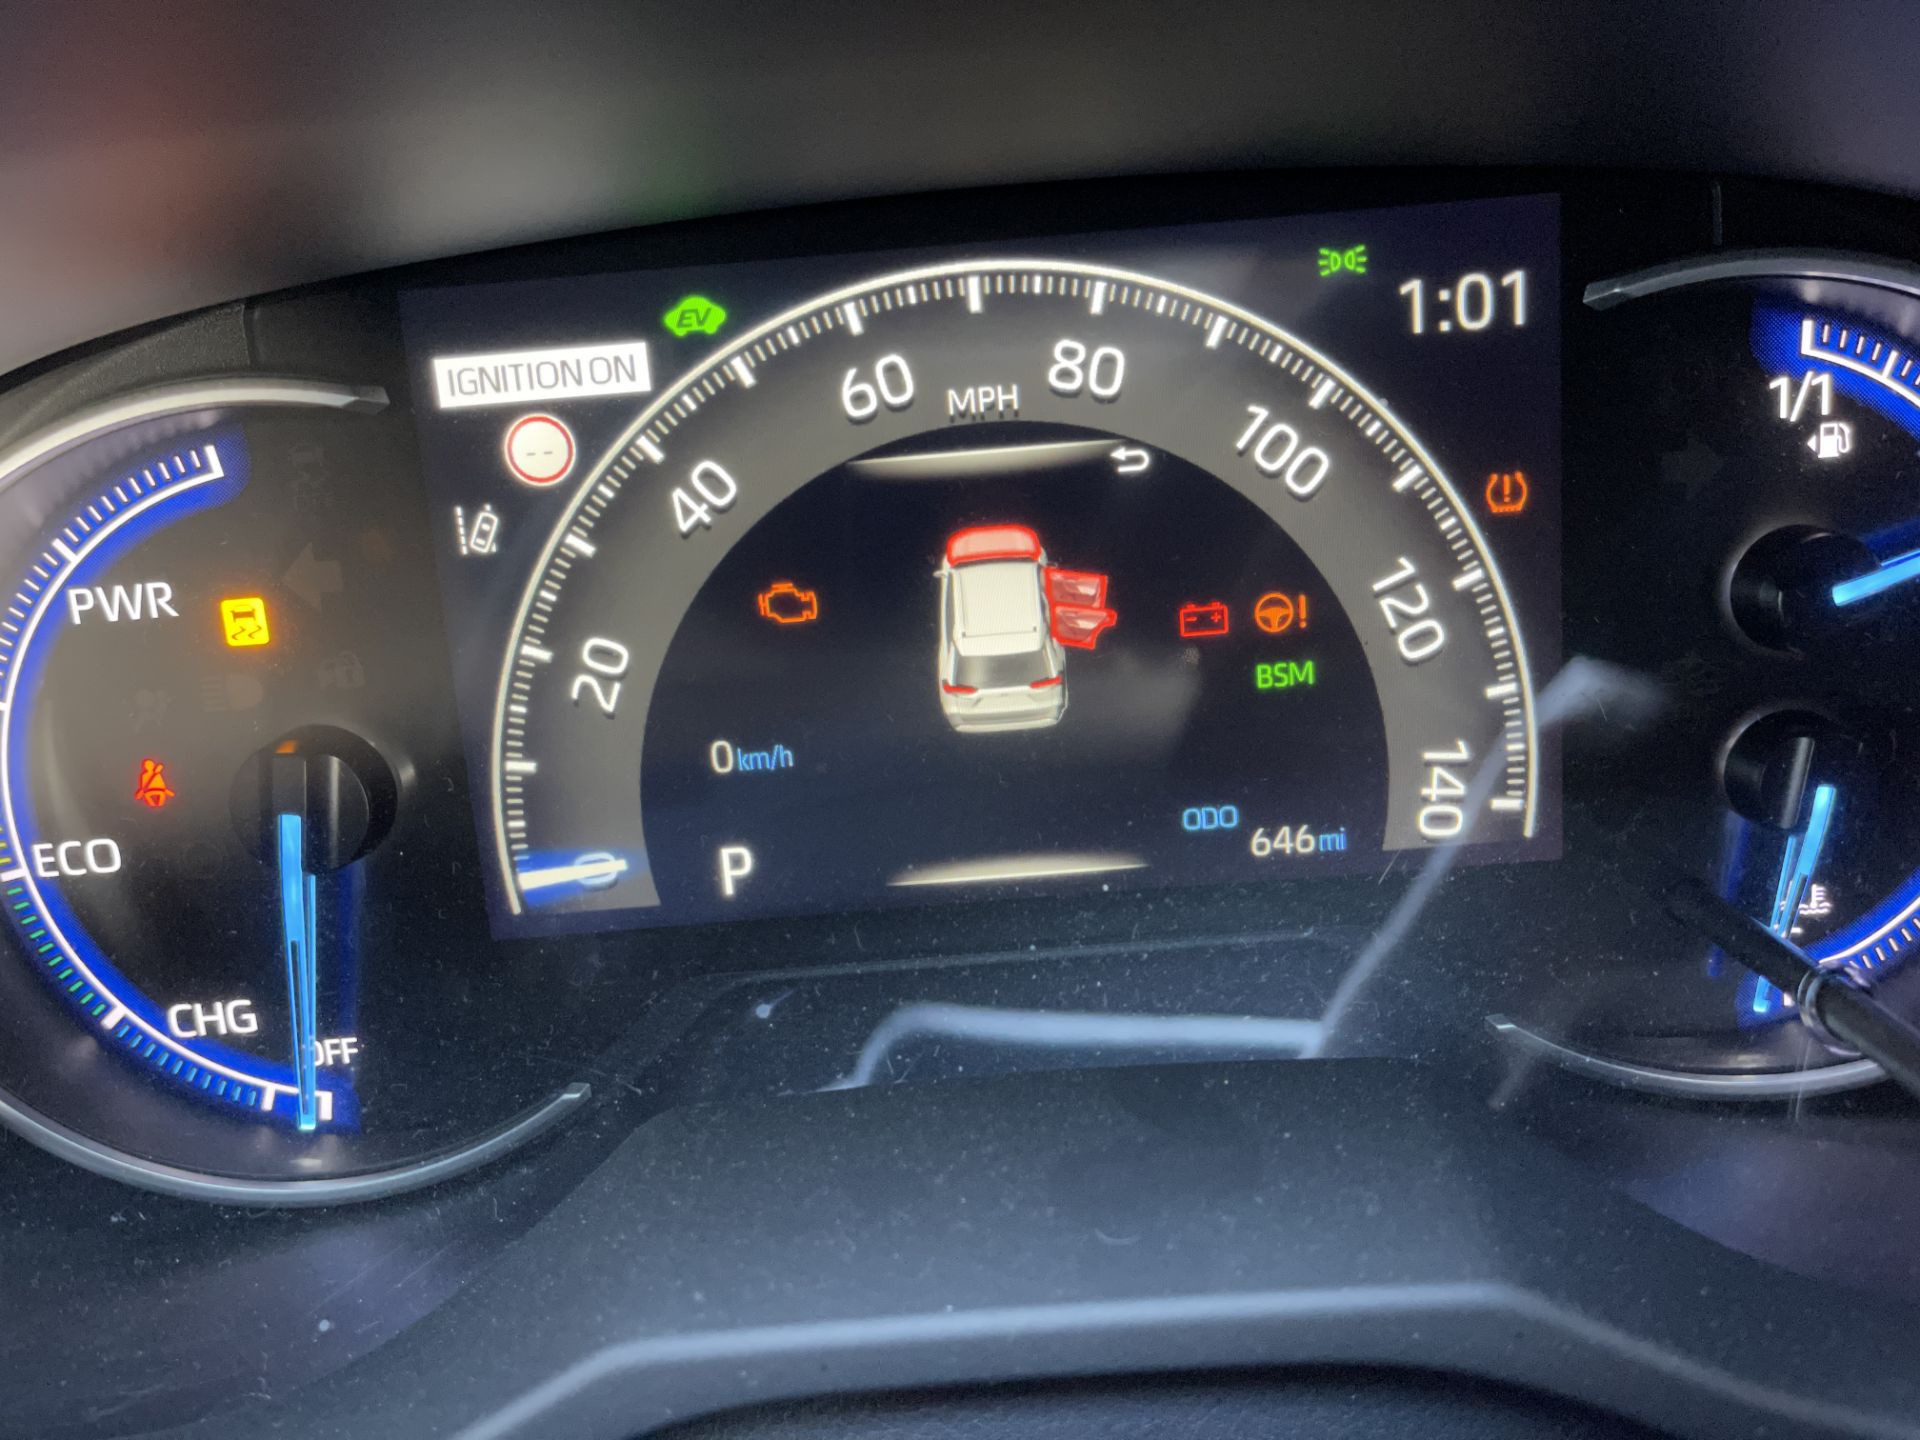 2019 - Toyota RAV 4 Dynamic HEV 4 x 2 CVT 2,487cc Petrol Hybrid Electric SUV, - Image 17 of 46